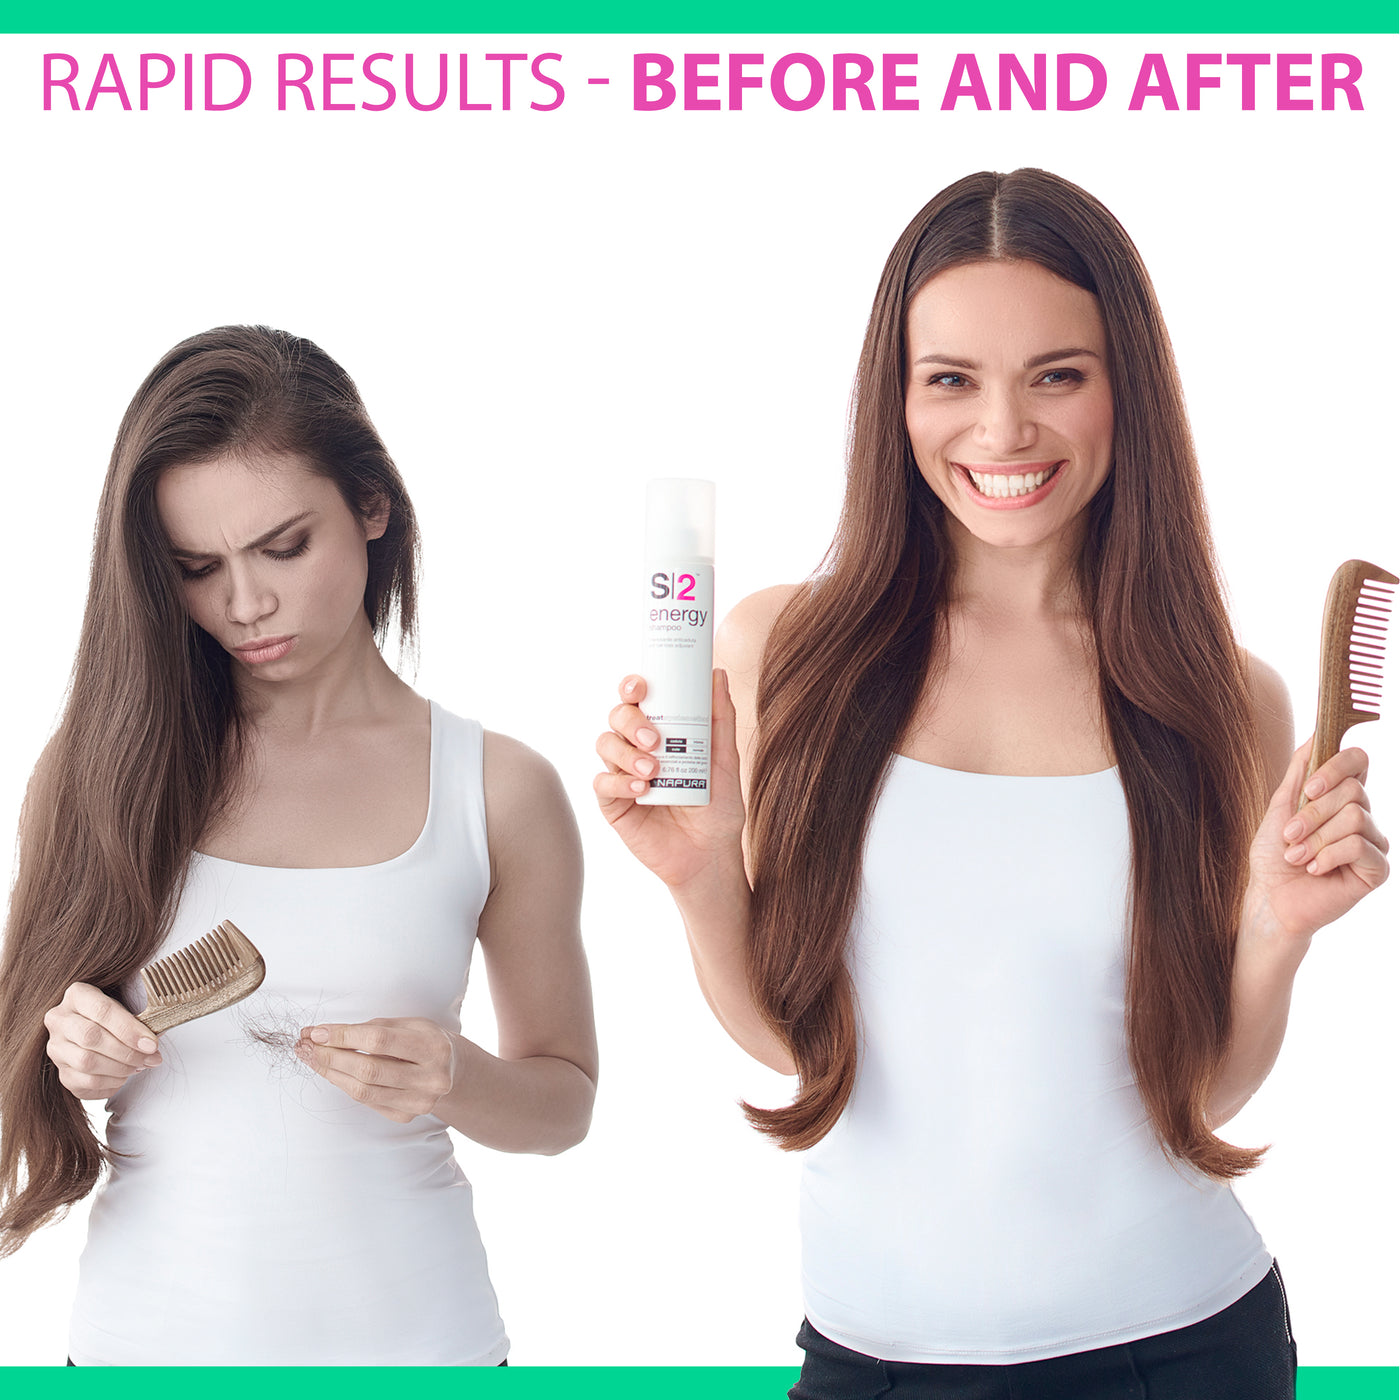 NAPURA S2 (6.76 fl oz) Professional Anti Hair Loss Shampoo with Biotin